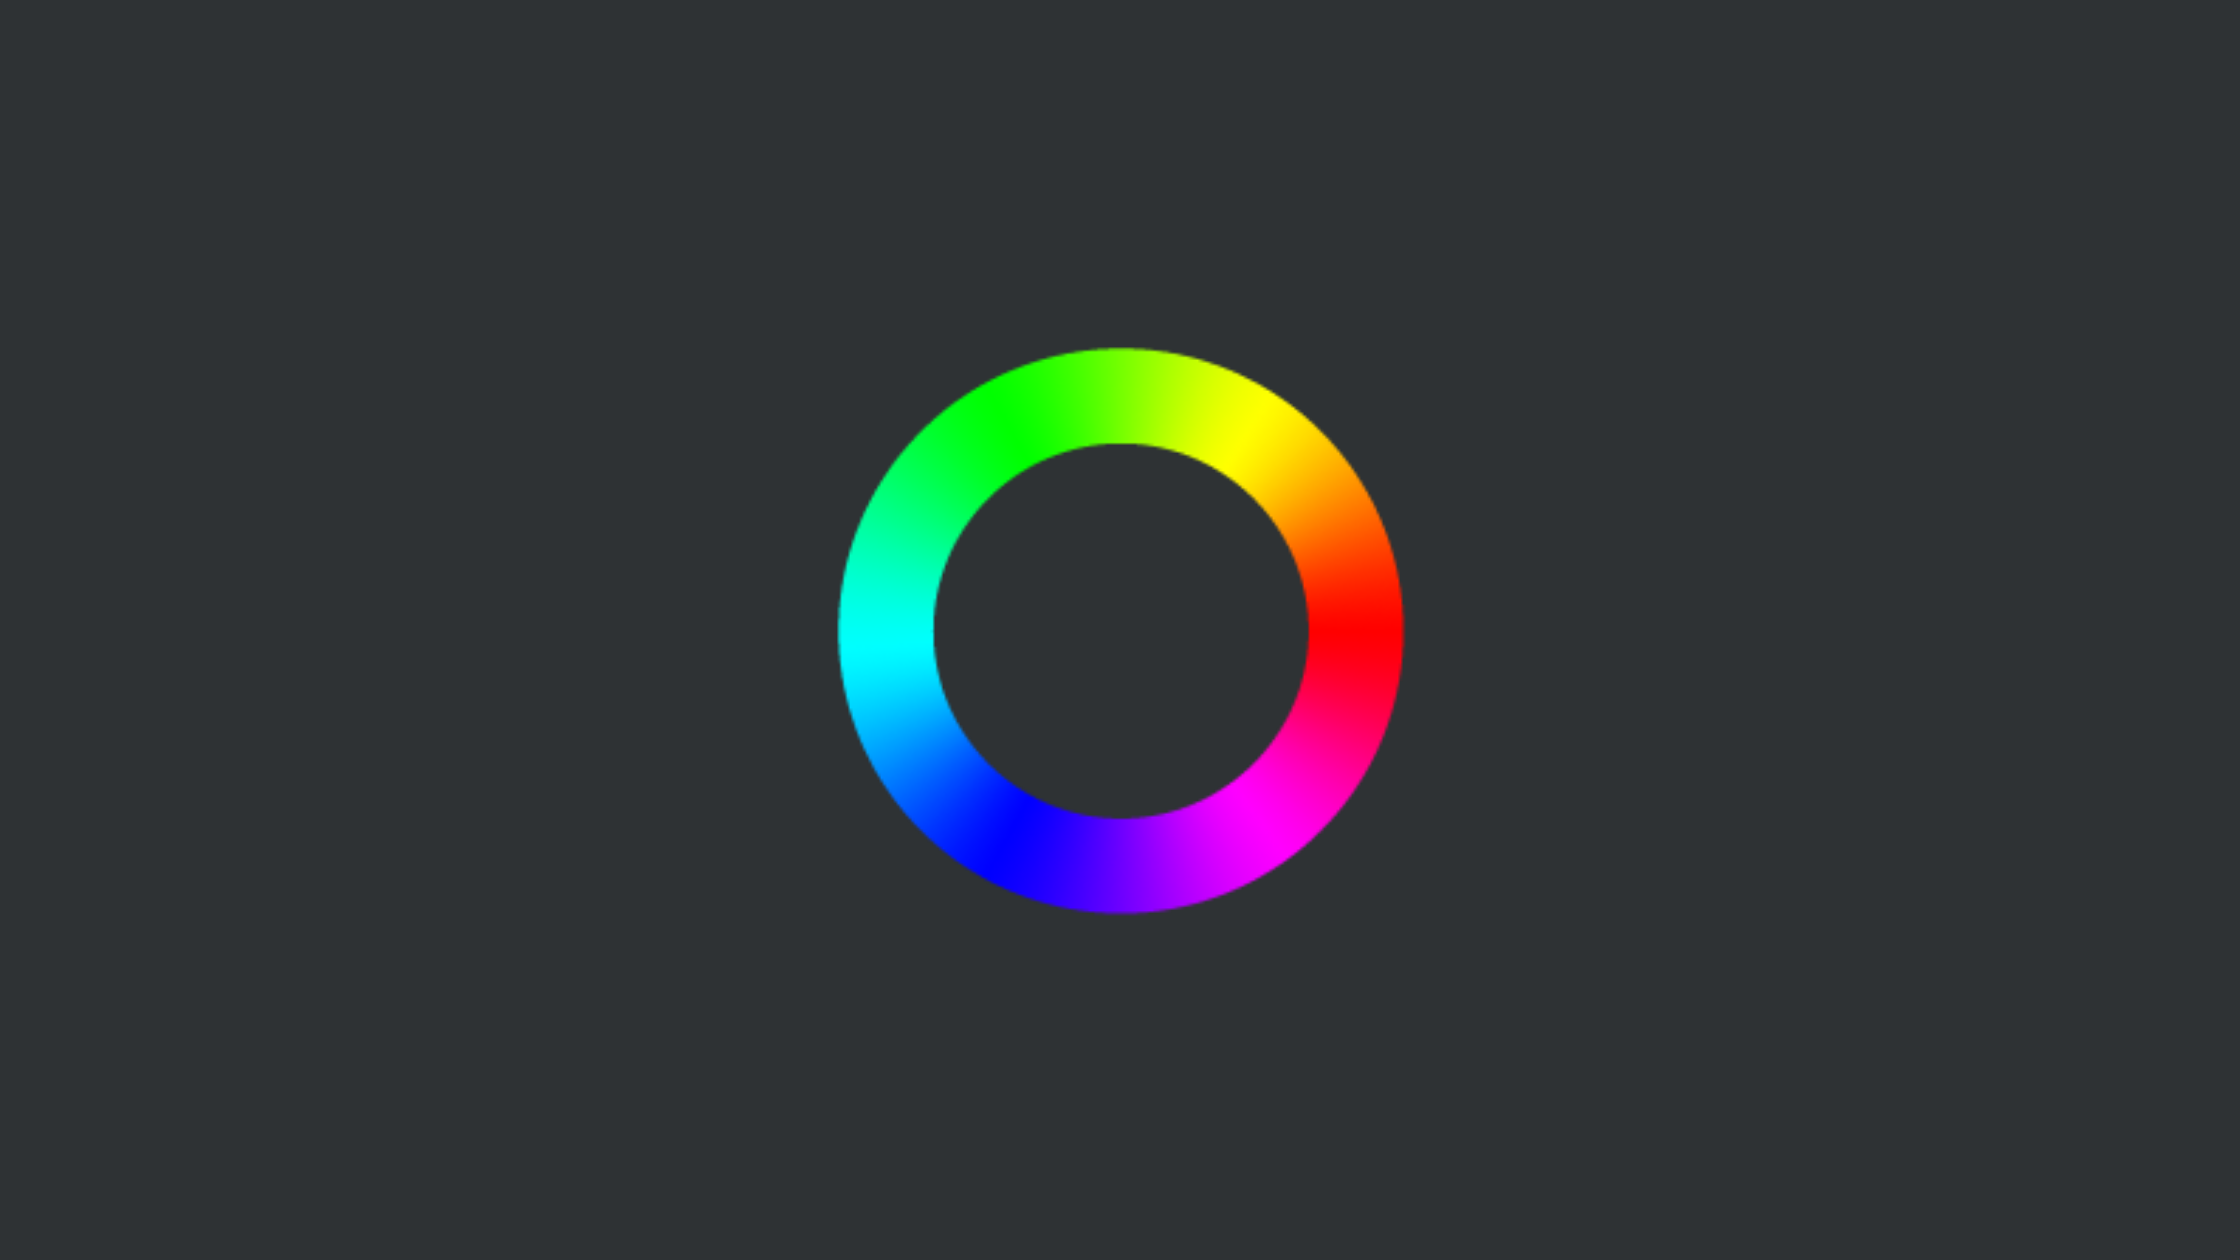 free color picker wheel app